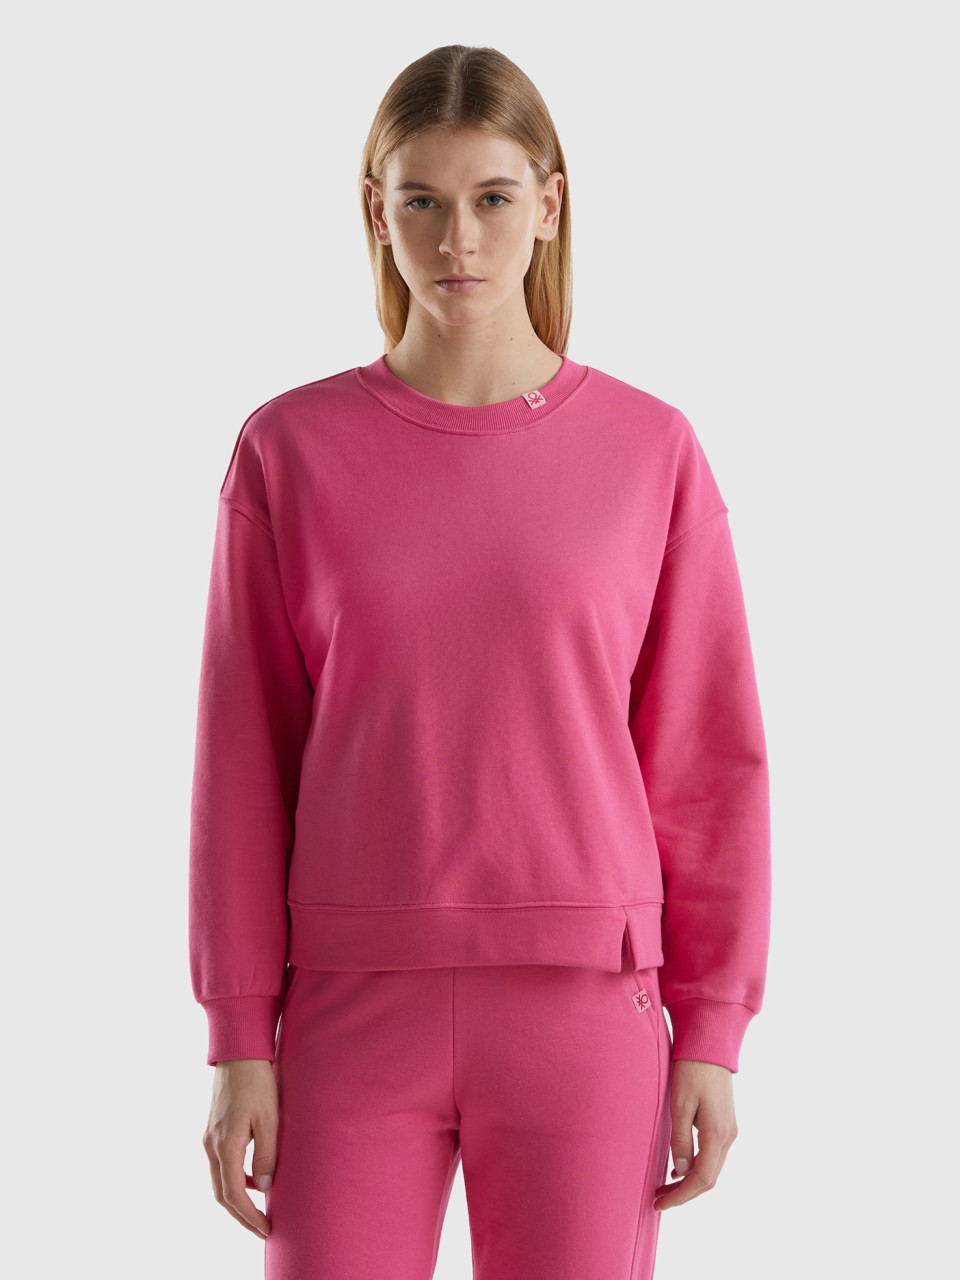 Benetton, Pullover Sweatshirt In Cotton Blend, Fuchsia, Women